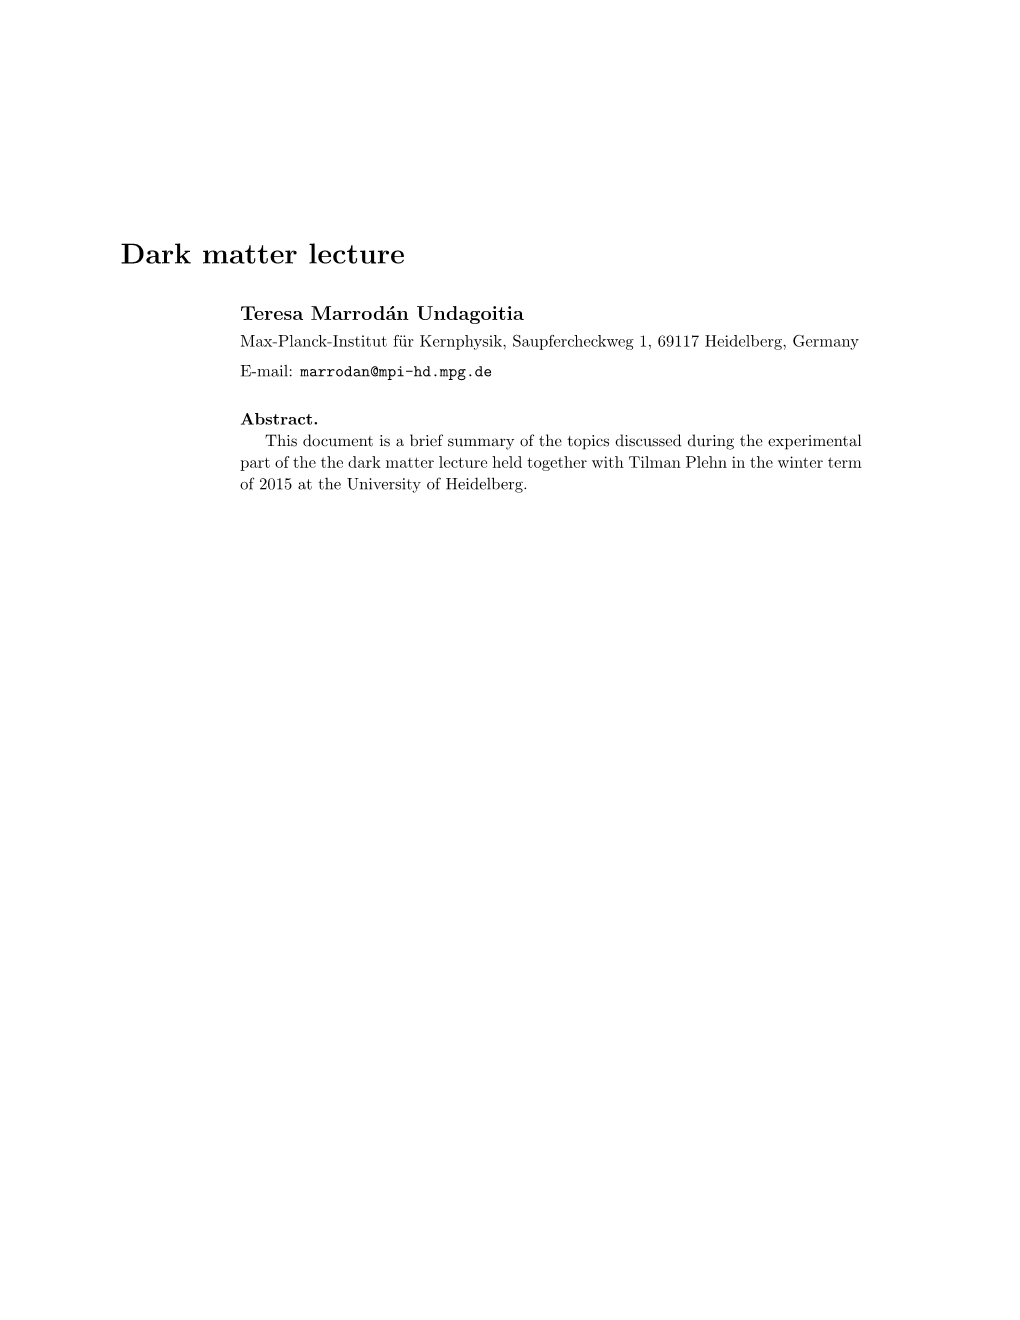 Dark Matter Lecture